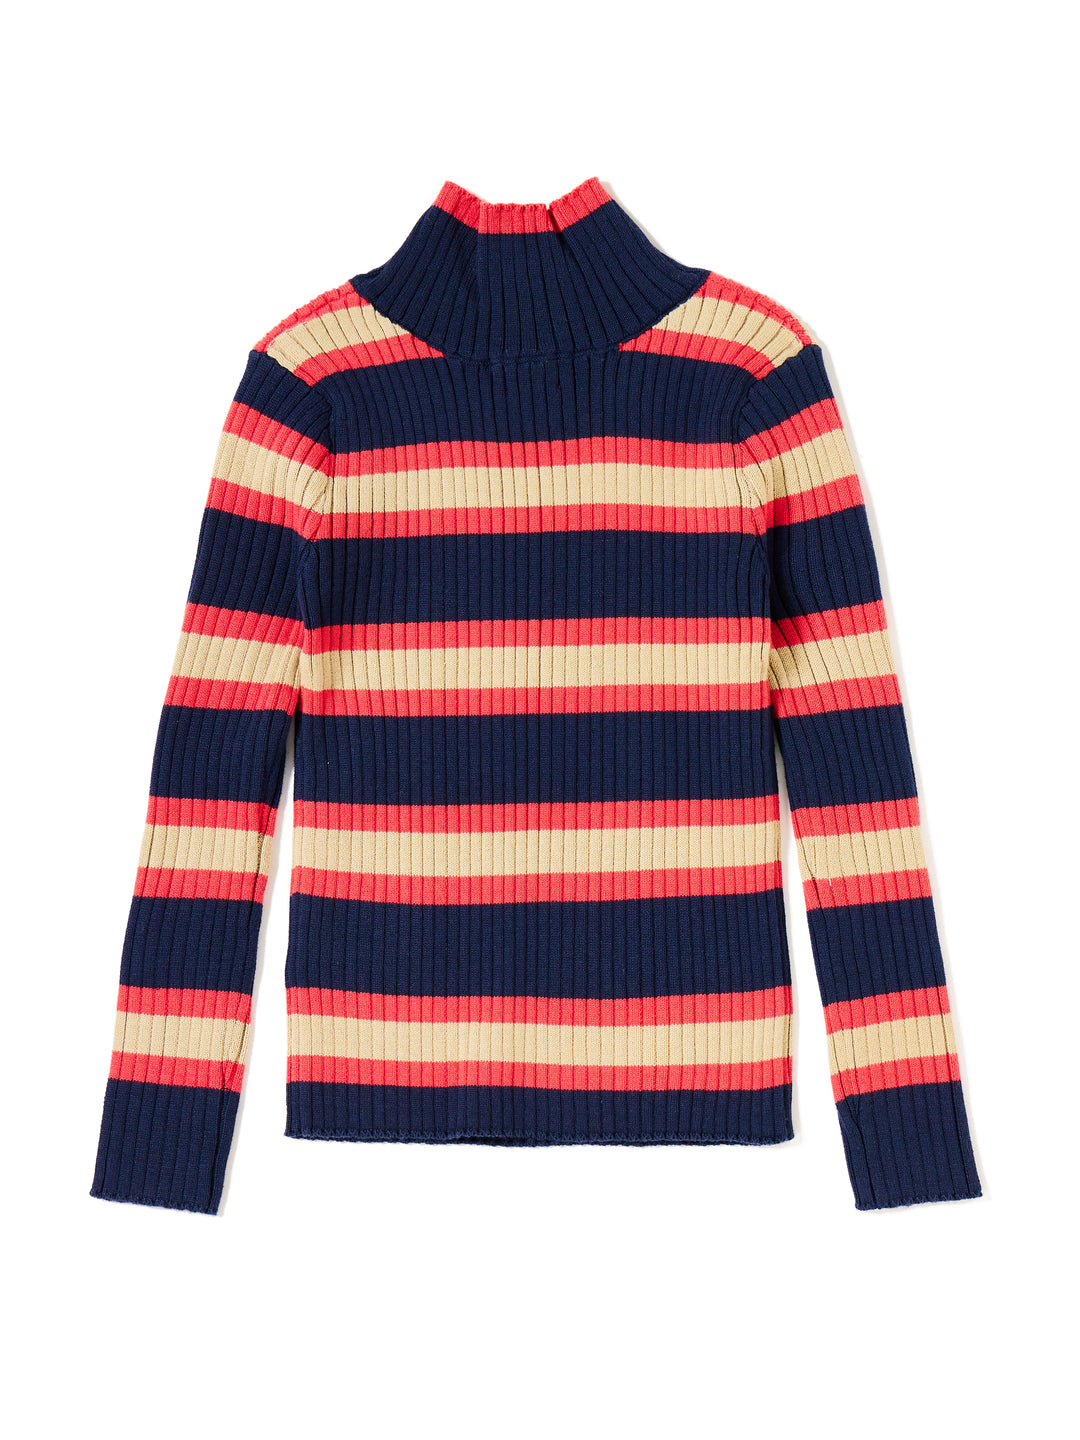 Colored Stripes Turtleneck Sweater - Denim